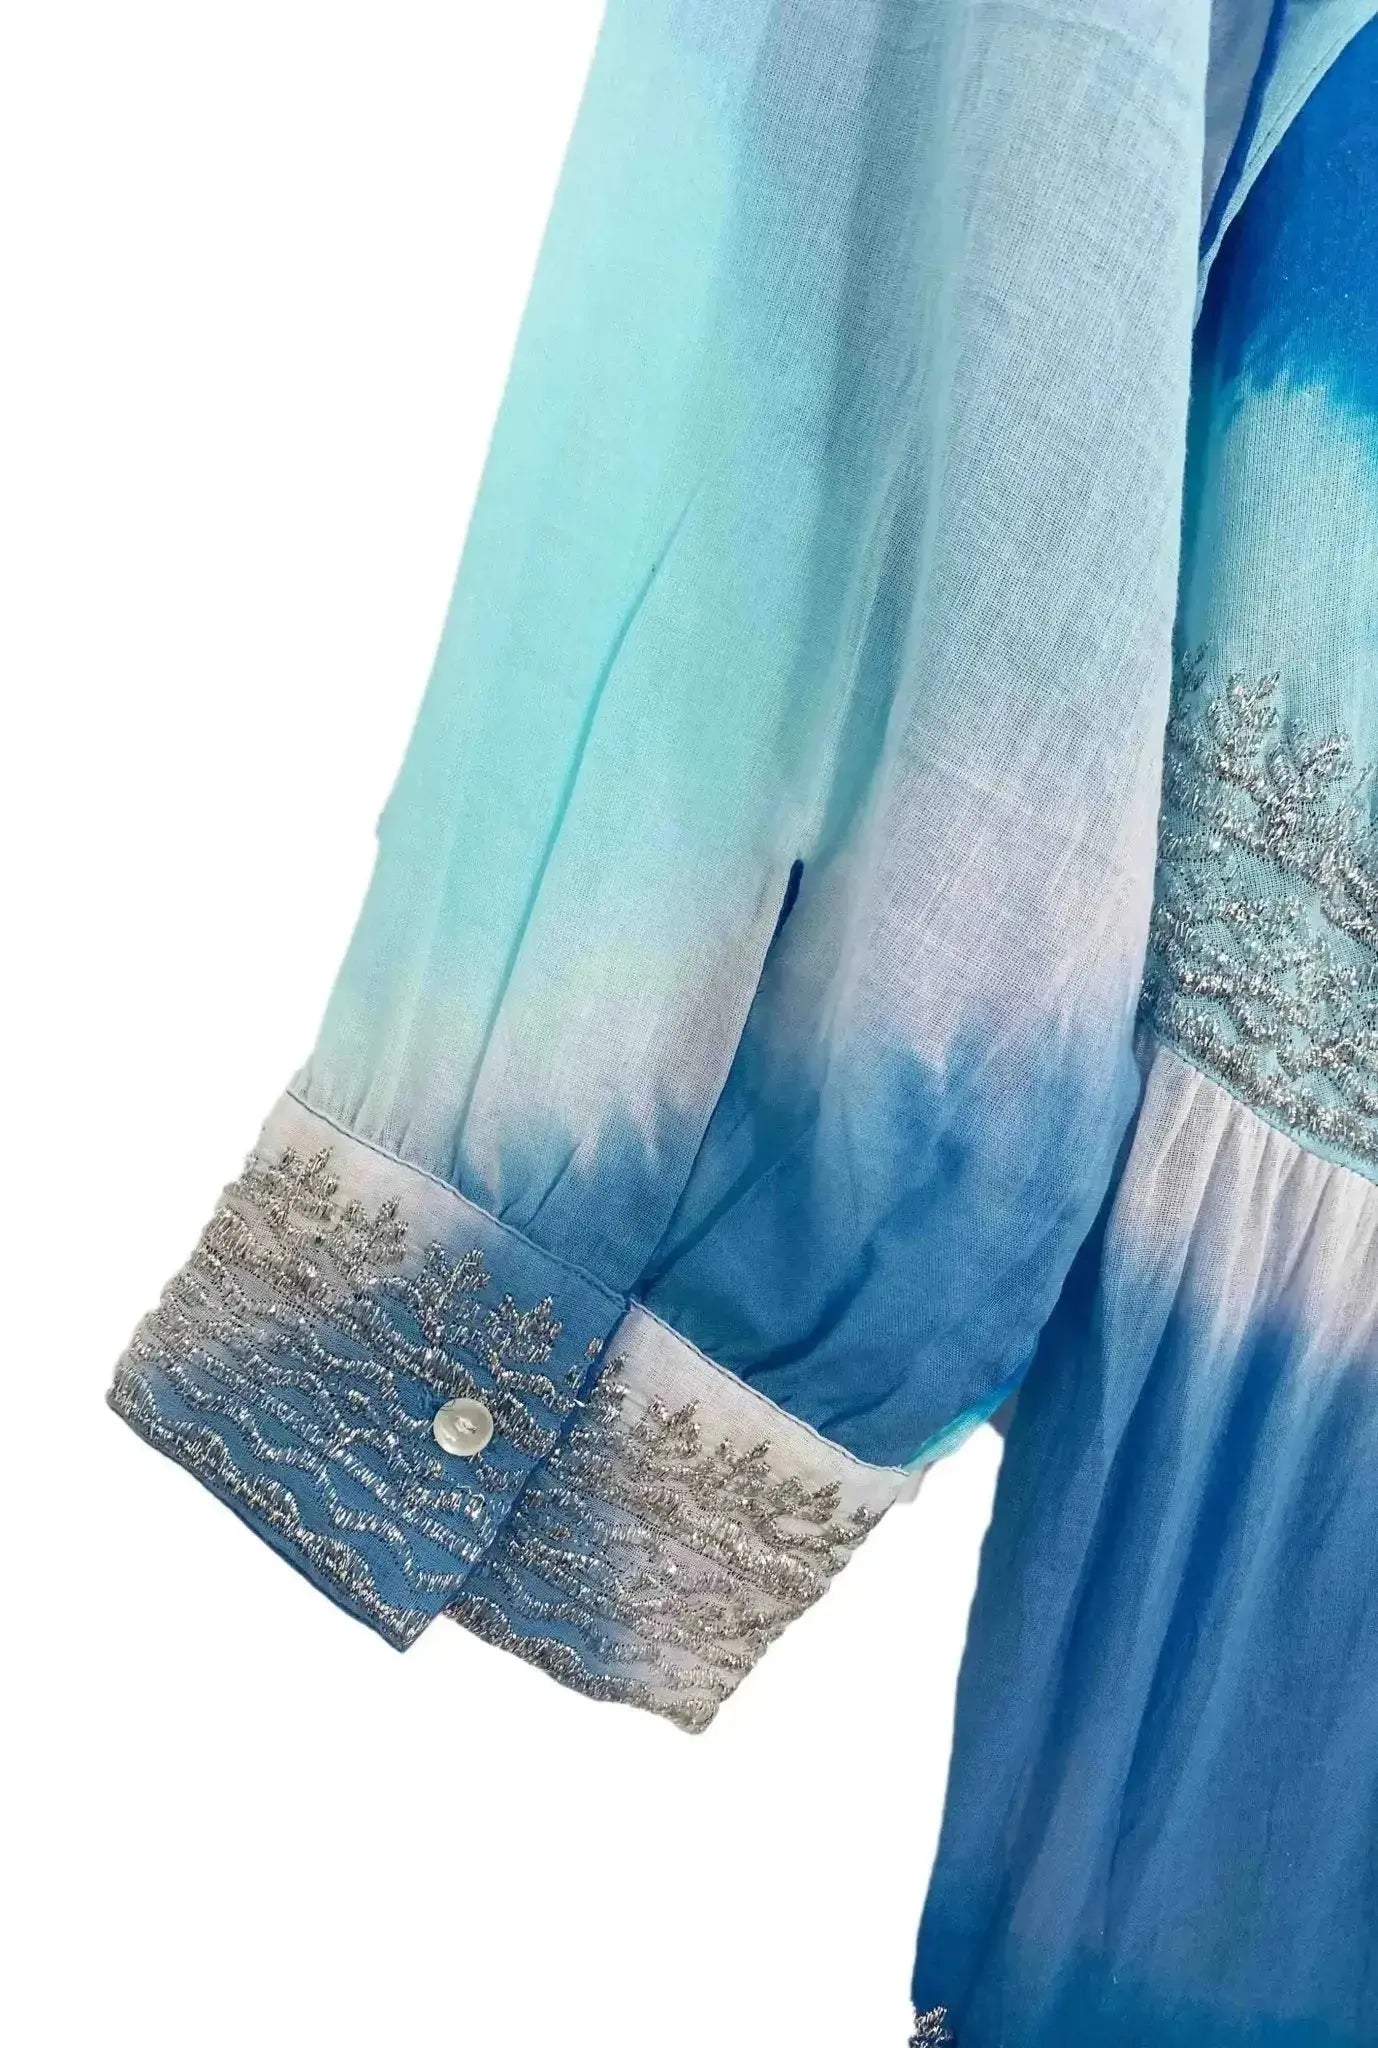 Juliet Dunn Batik Kleid Blautöne - KNOCKNOK Fashion